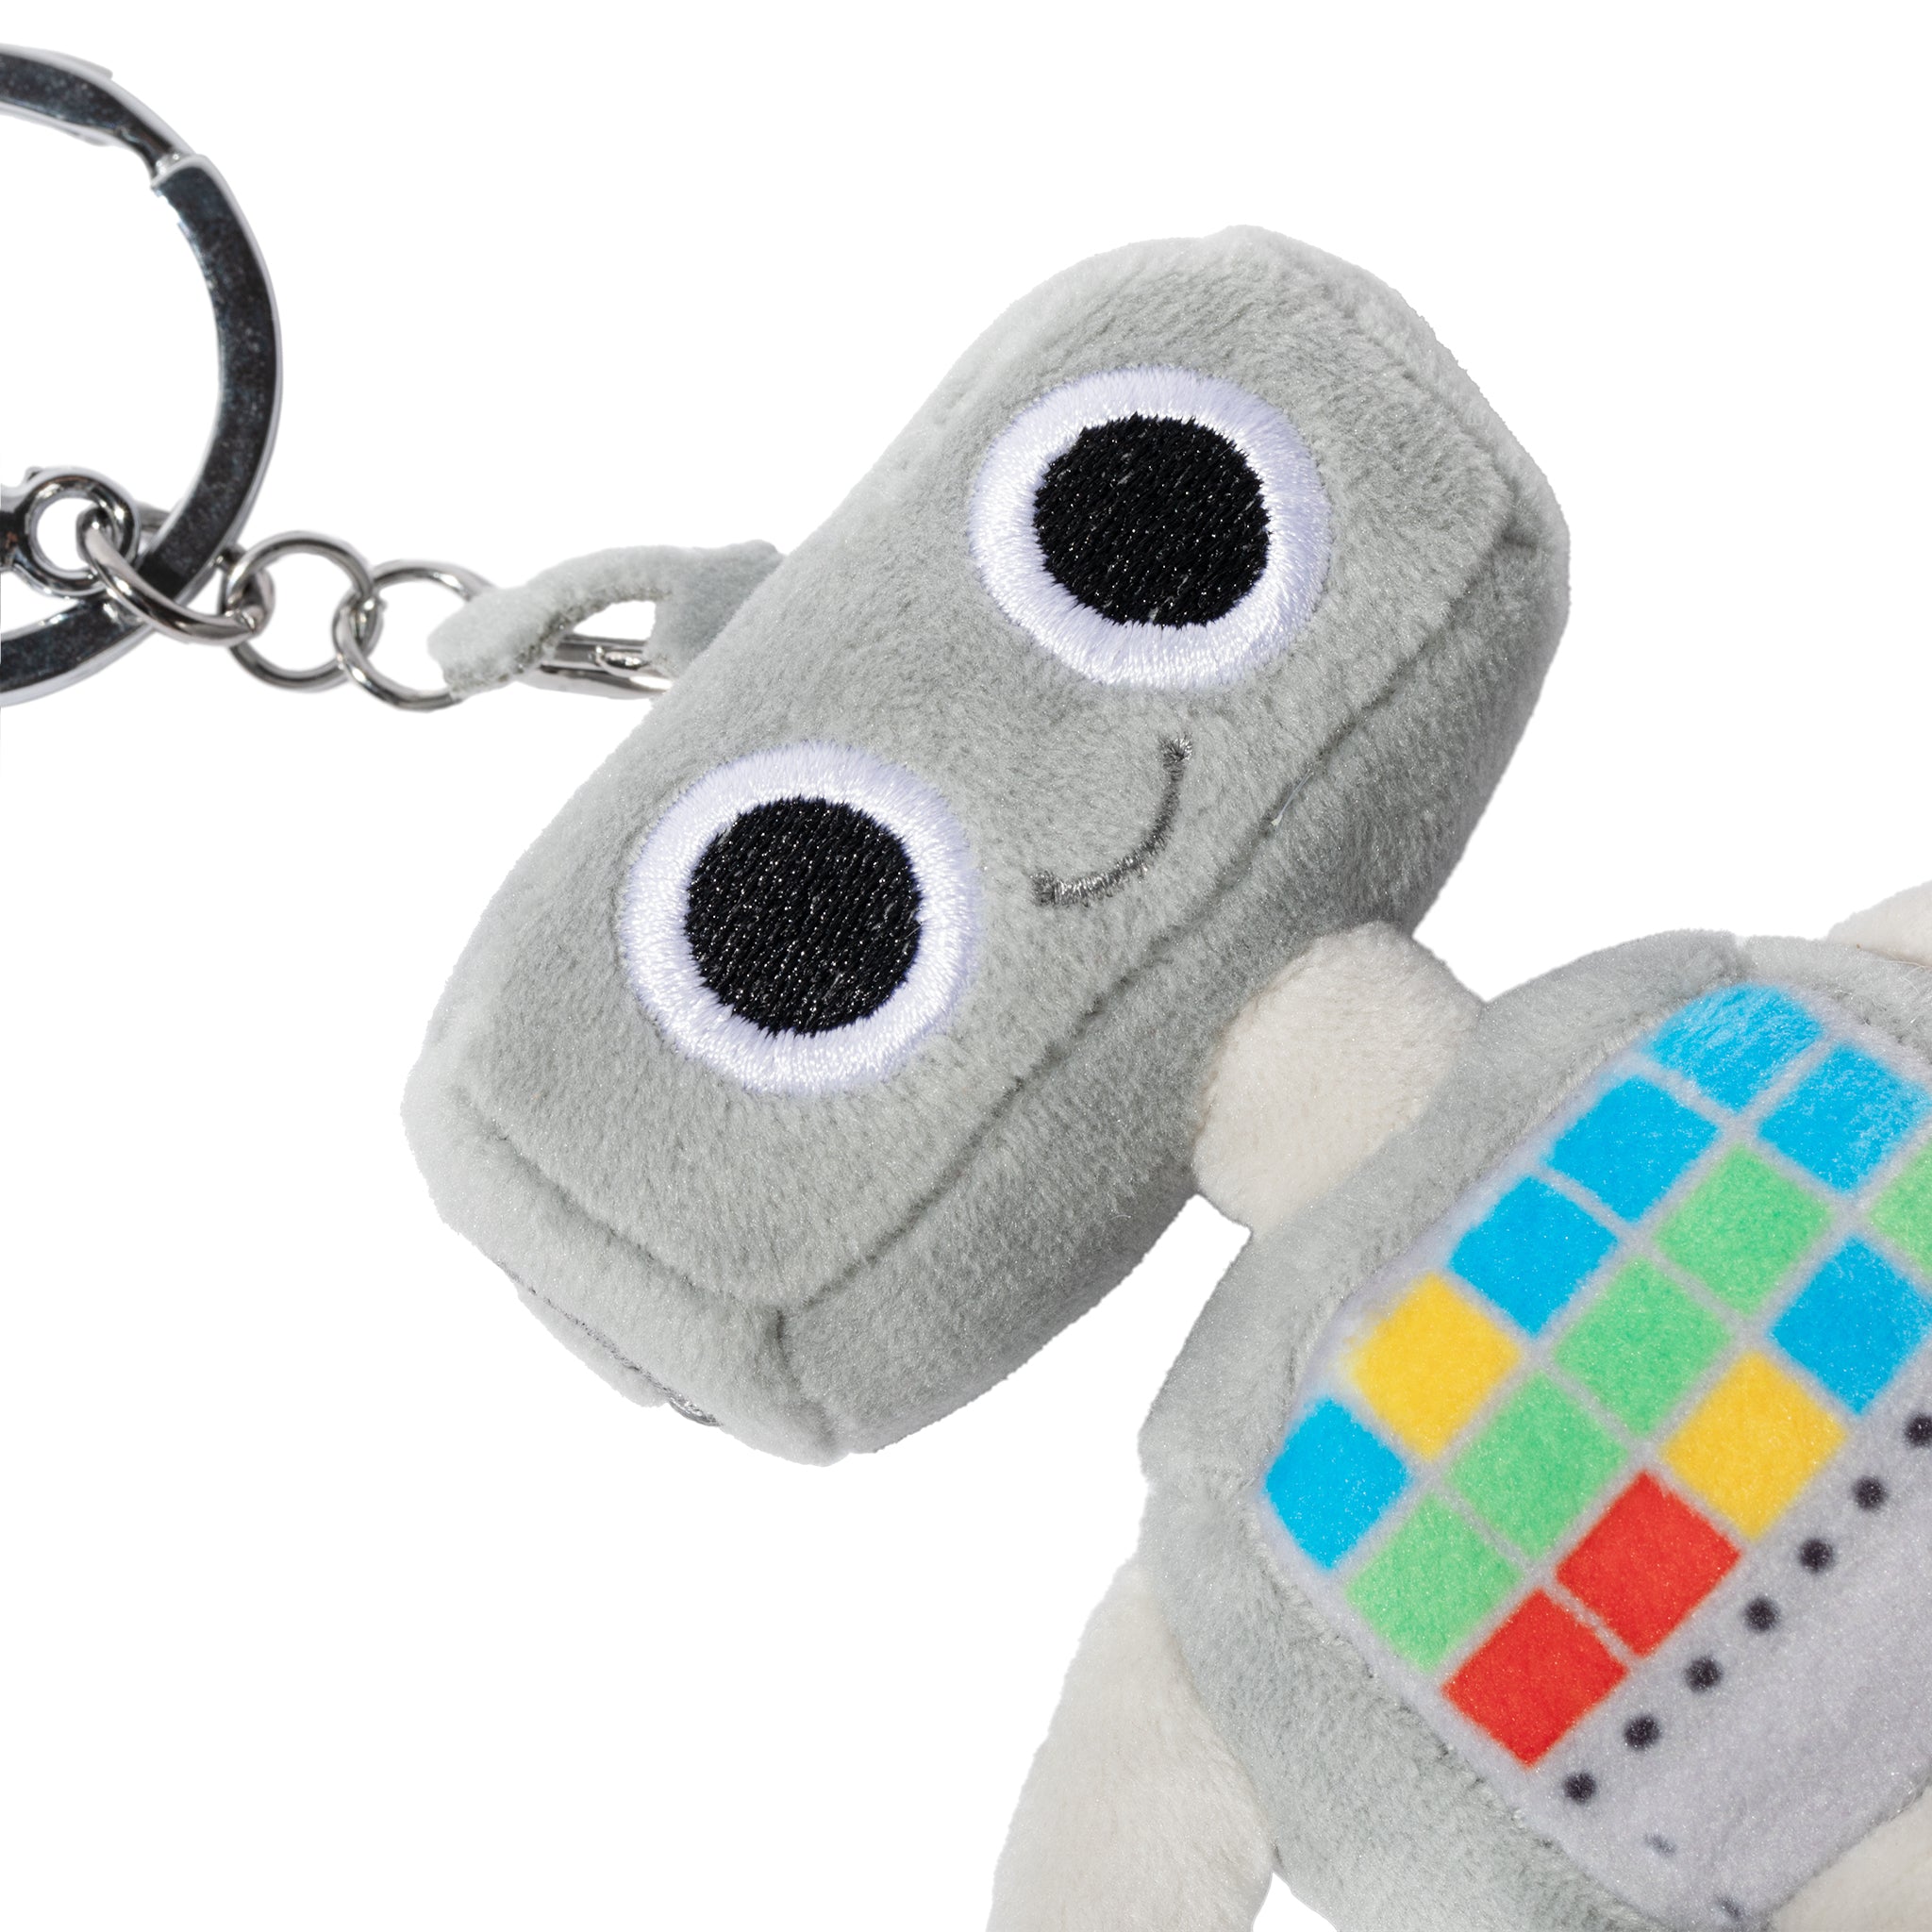  Listener Kids Jett the Robot Soft Plush keychain, Cute